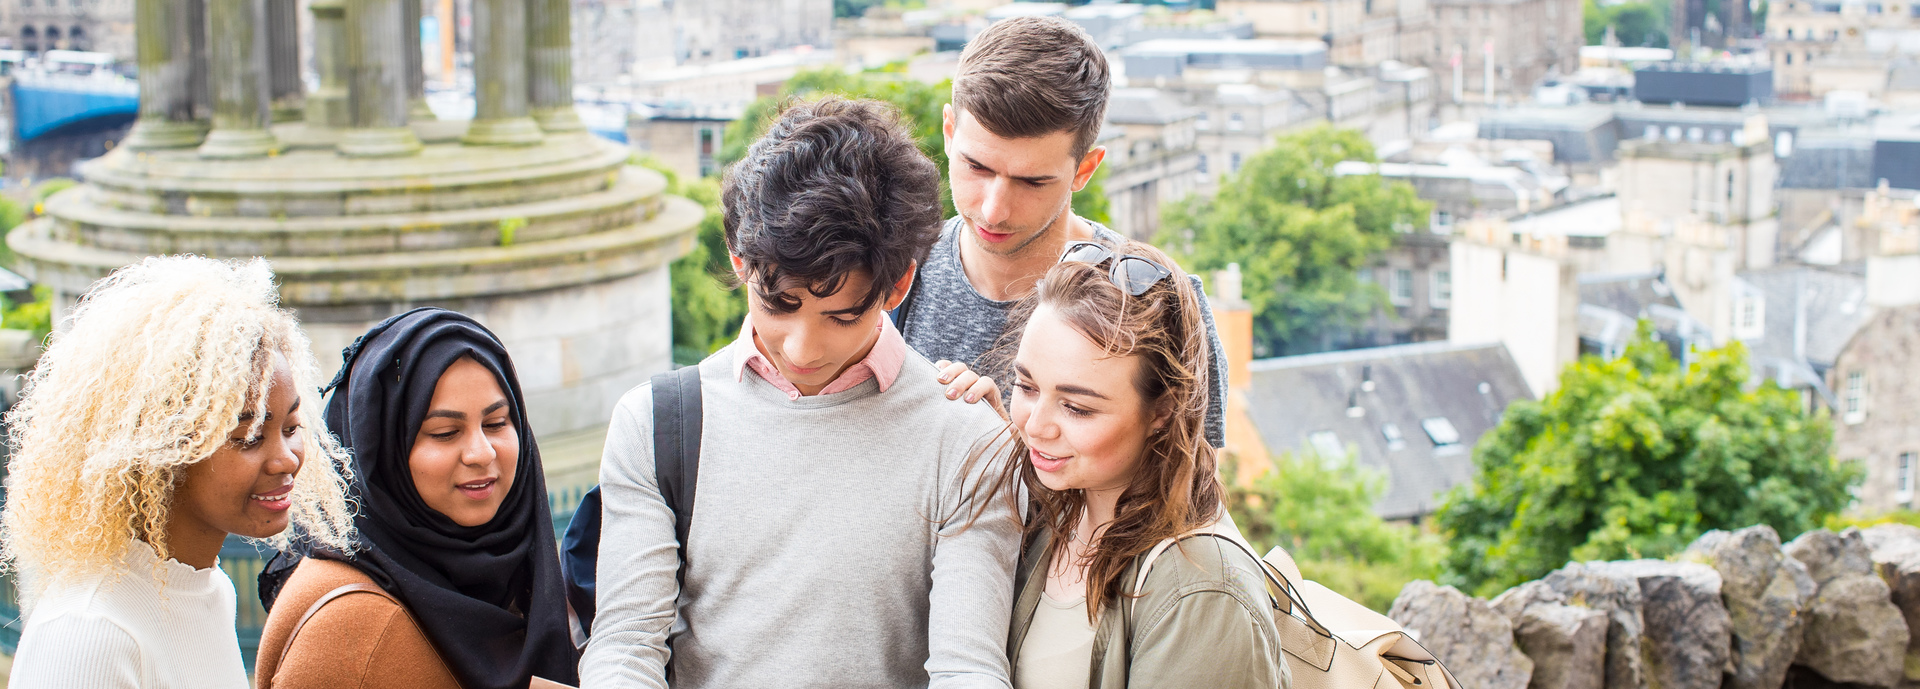 Students sightseeing in Edinburgh